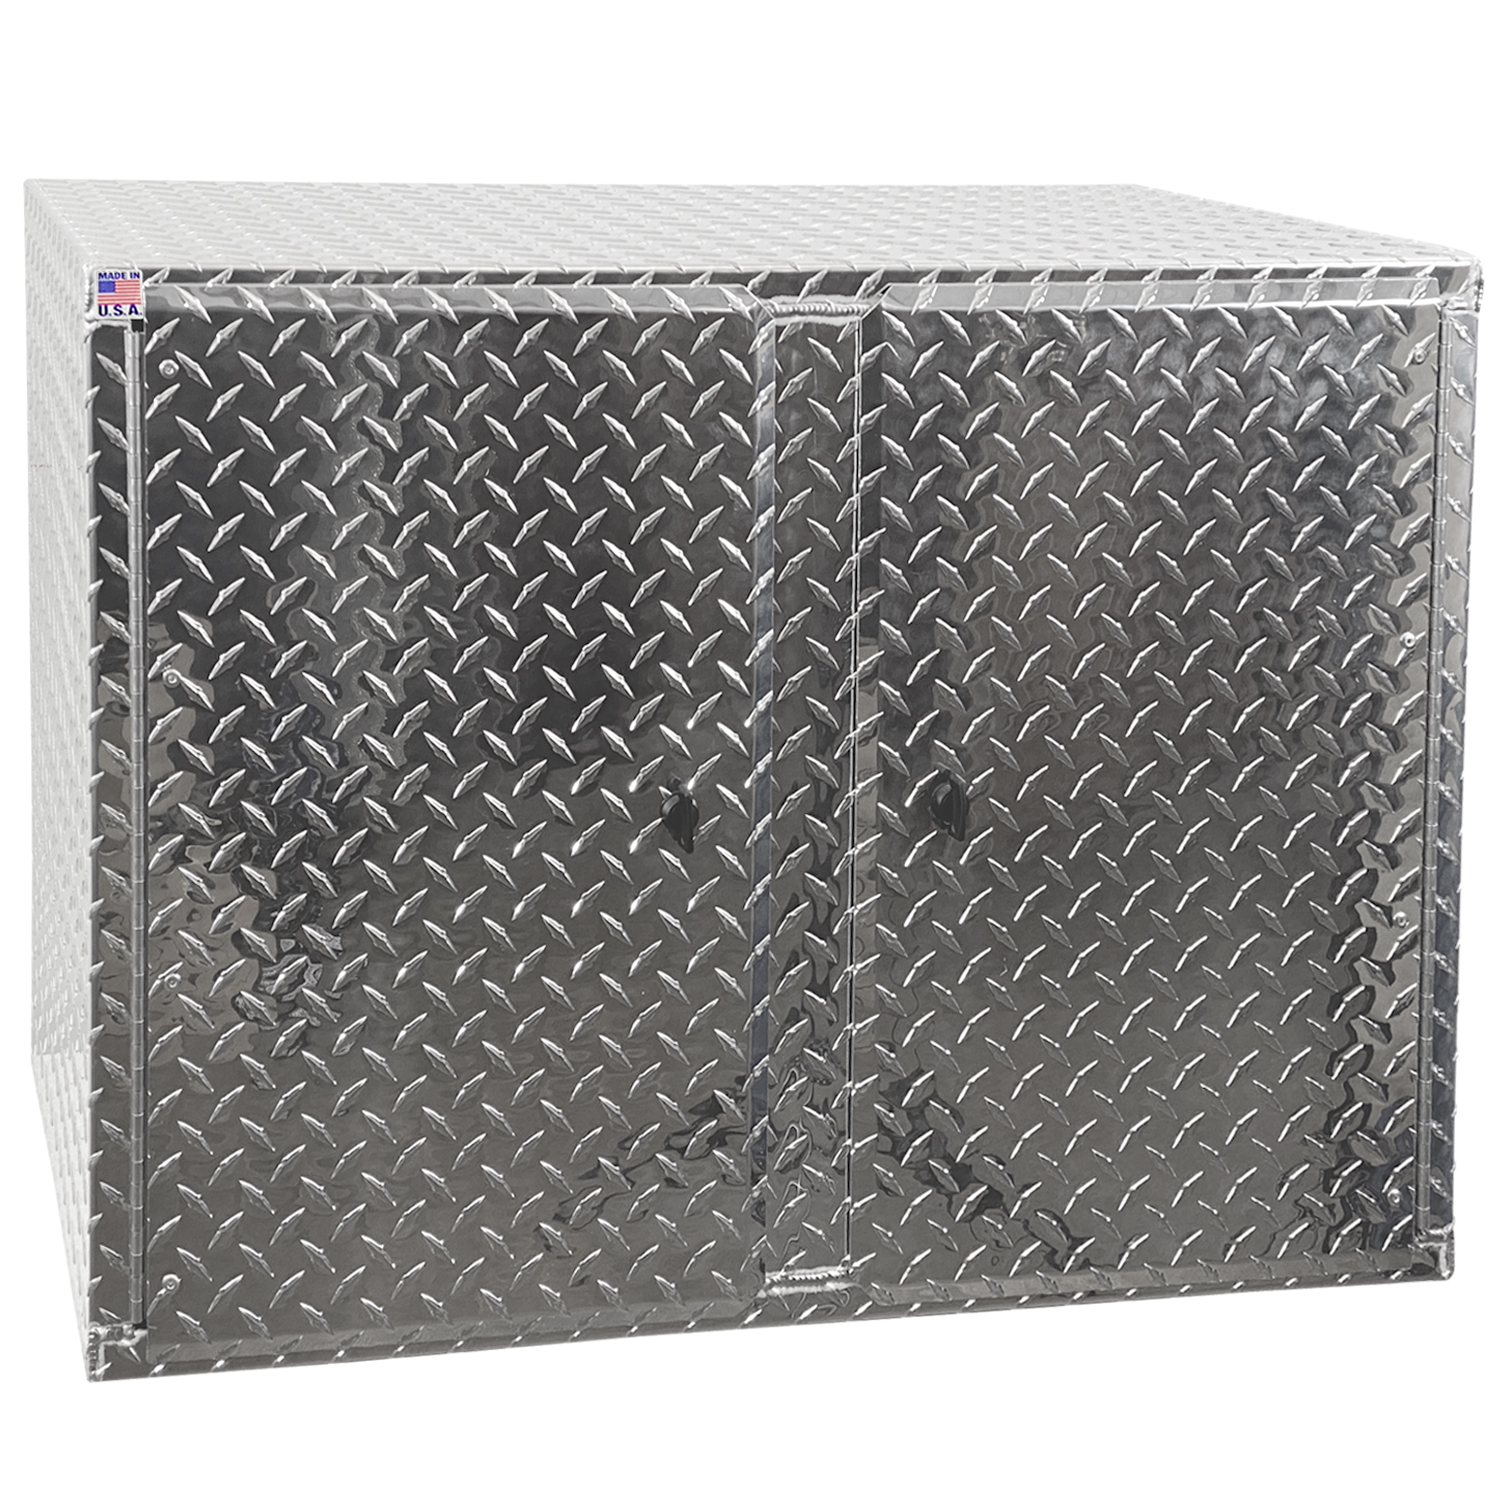 NEW Pit Posse Utility Series Storage Universal Aluminum Rear Tool Box Cabinet 